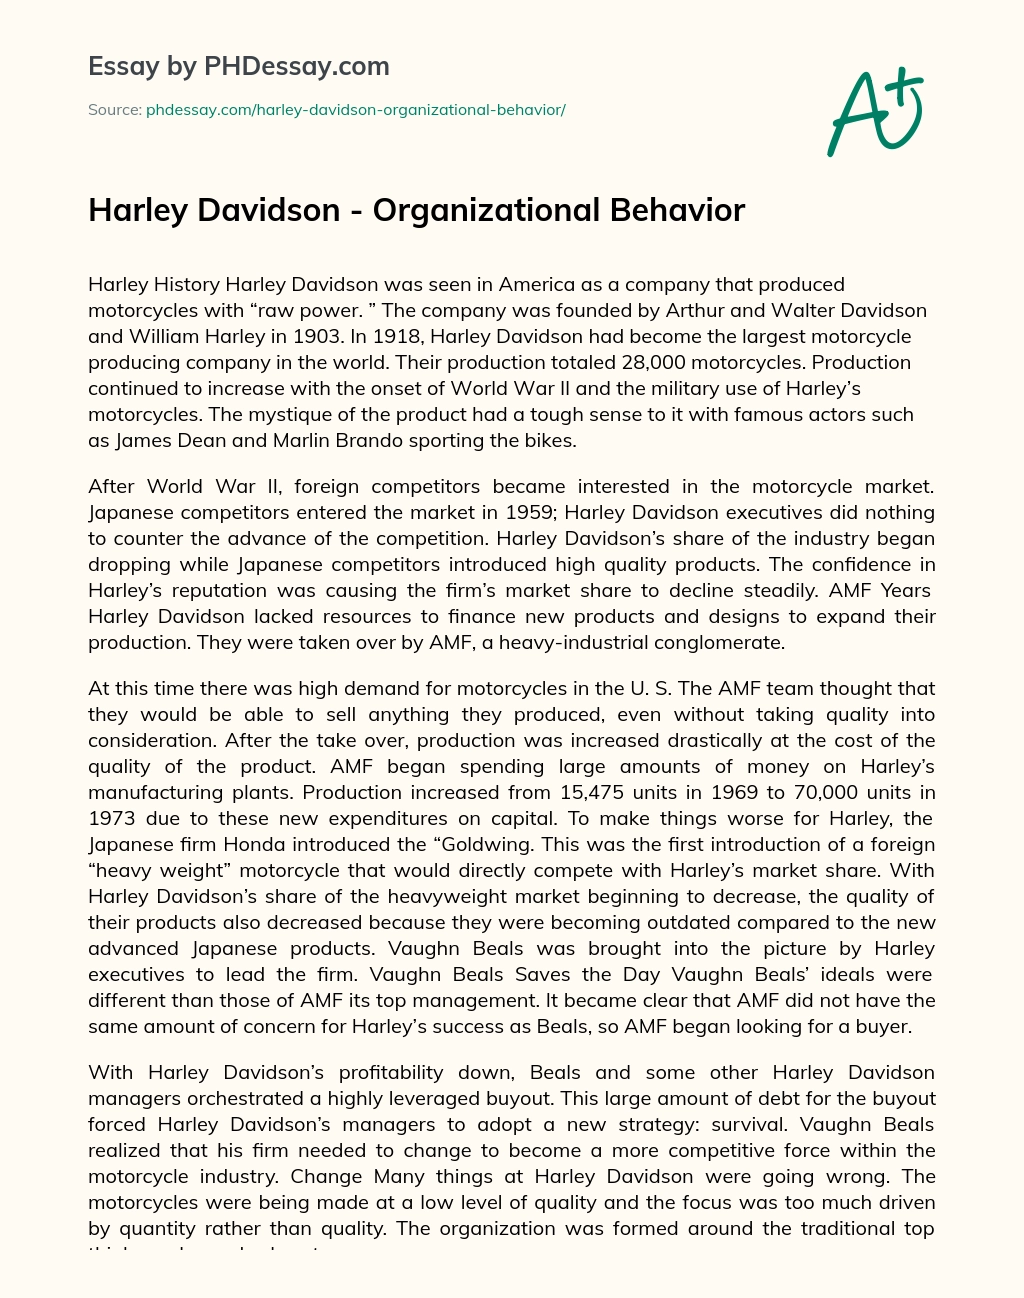 Harley Davidson – Organizational Behavior essay